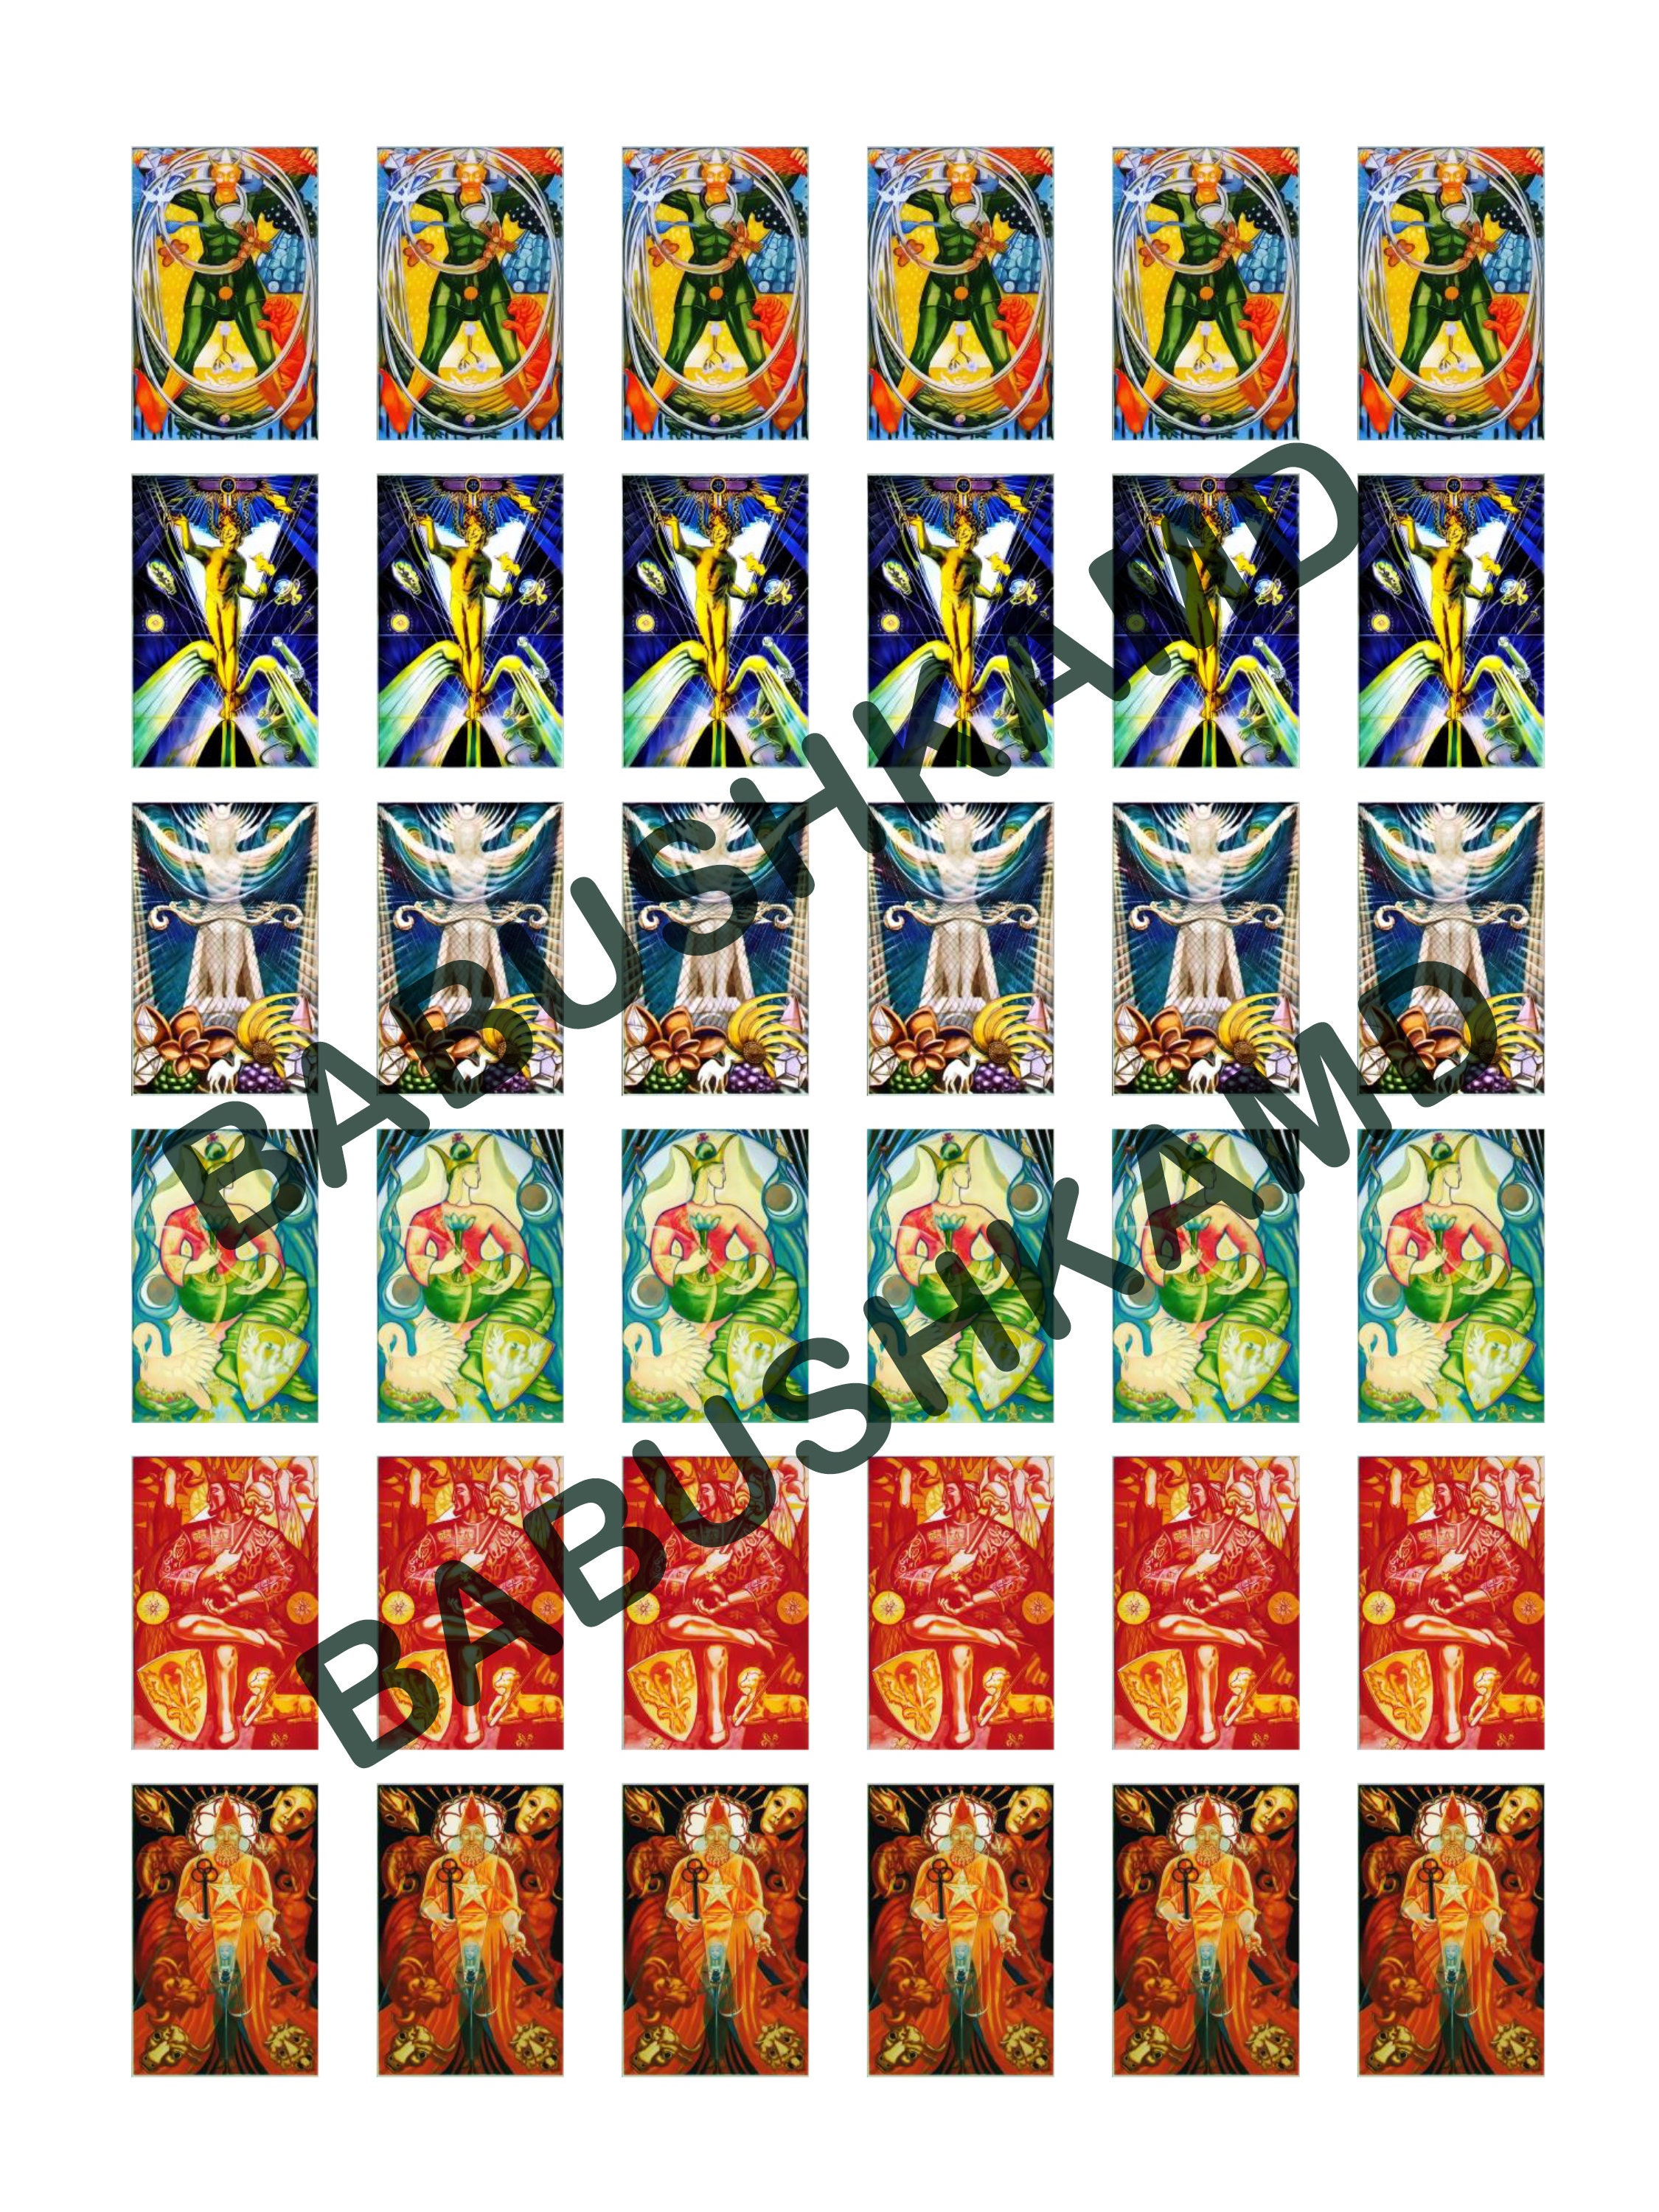 Printable Mini Tarot Major Arcana Stickers (0.75 x 0.45 inches), Tarot  Journal Stickers